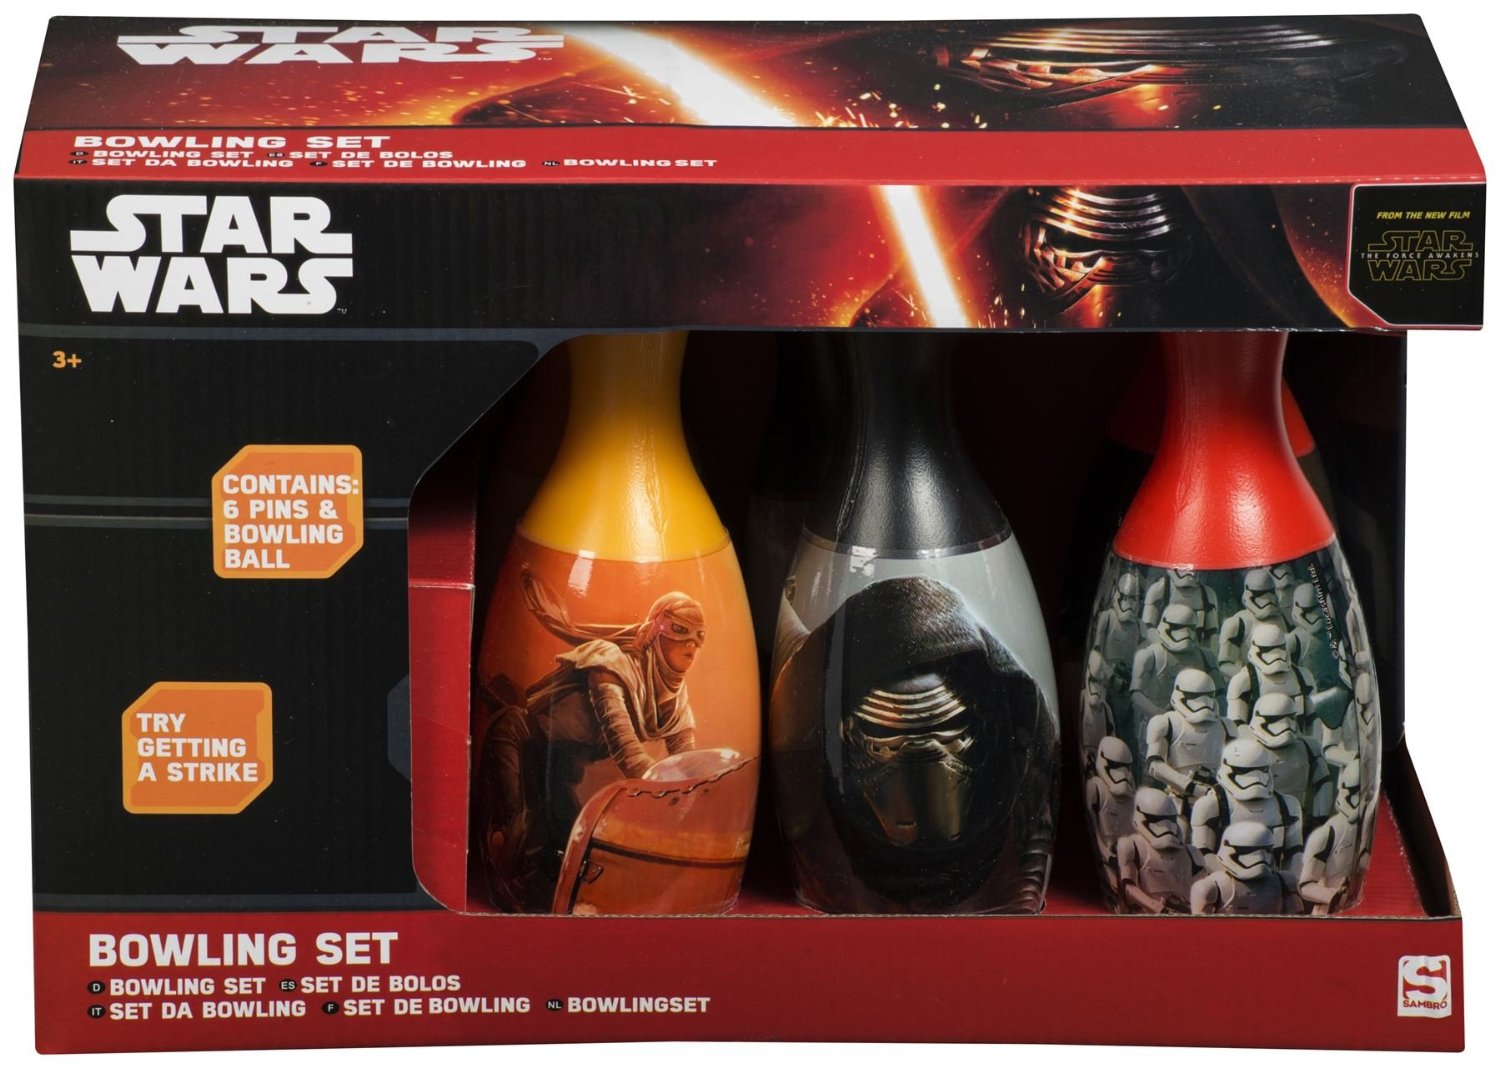 Disney Star Wars 'The Force Awakens' 7 Piece Bowling Set Toy